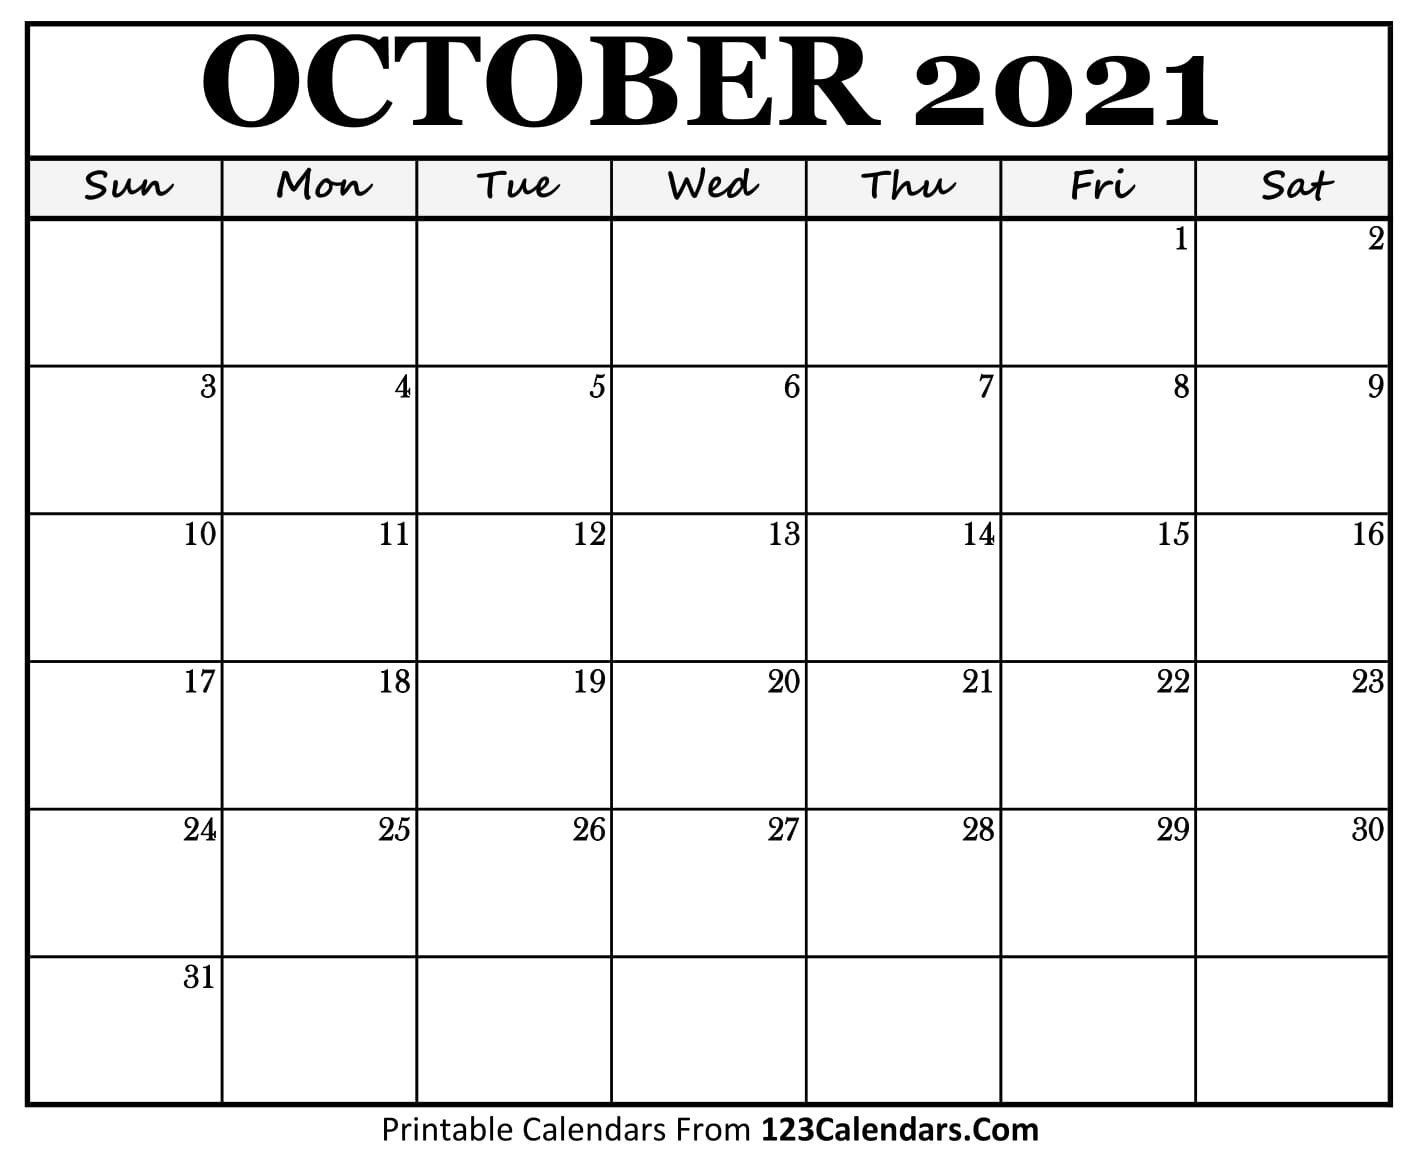 Printable October 2021 Calendar Templates | 123Calendars 2021 Calendar Of October